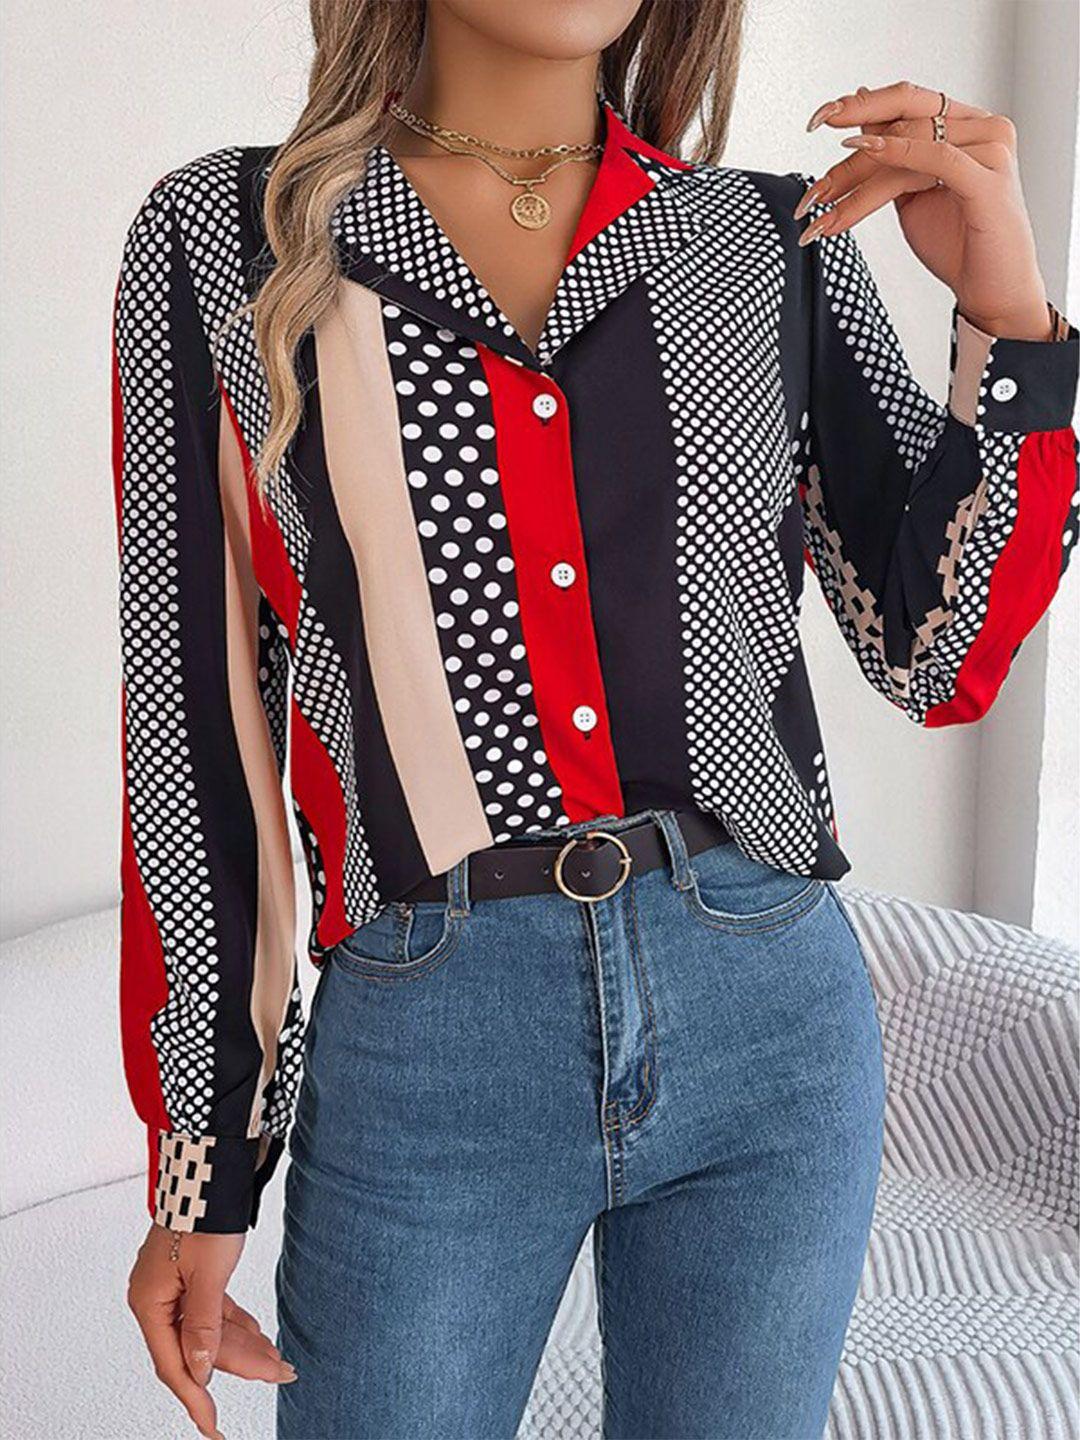 stylecast women red polka dot opaque colourblocked casual shirt